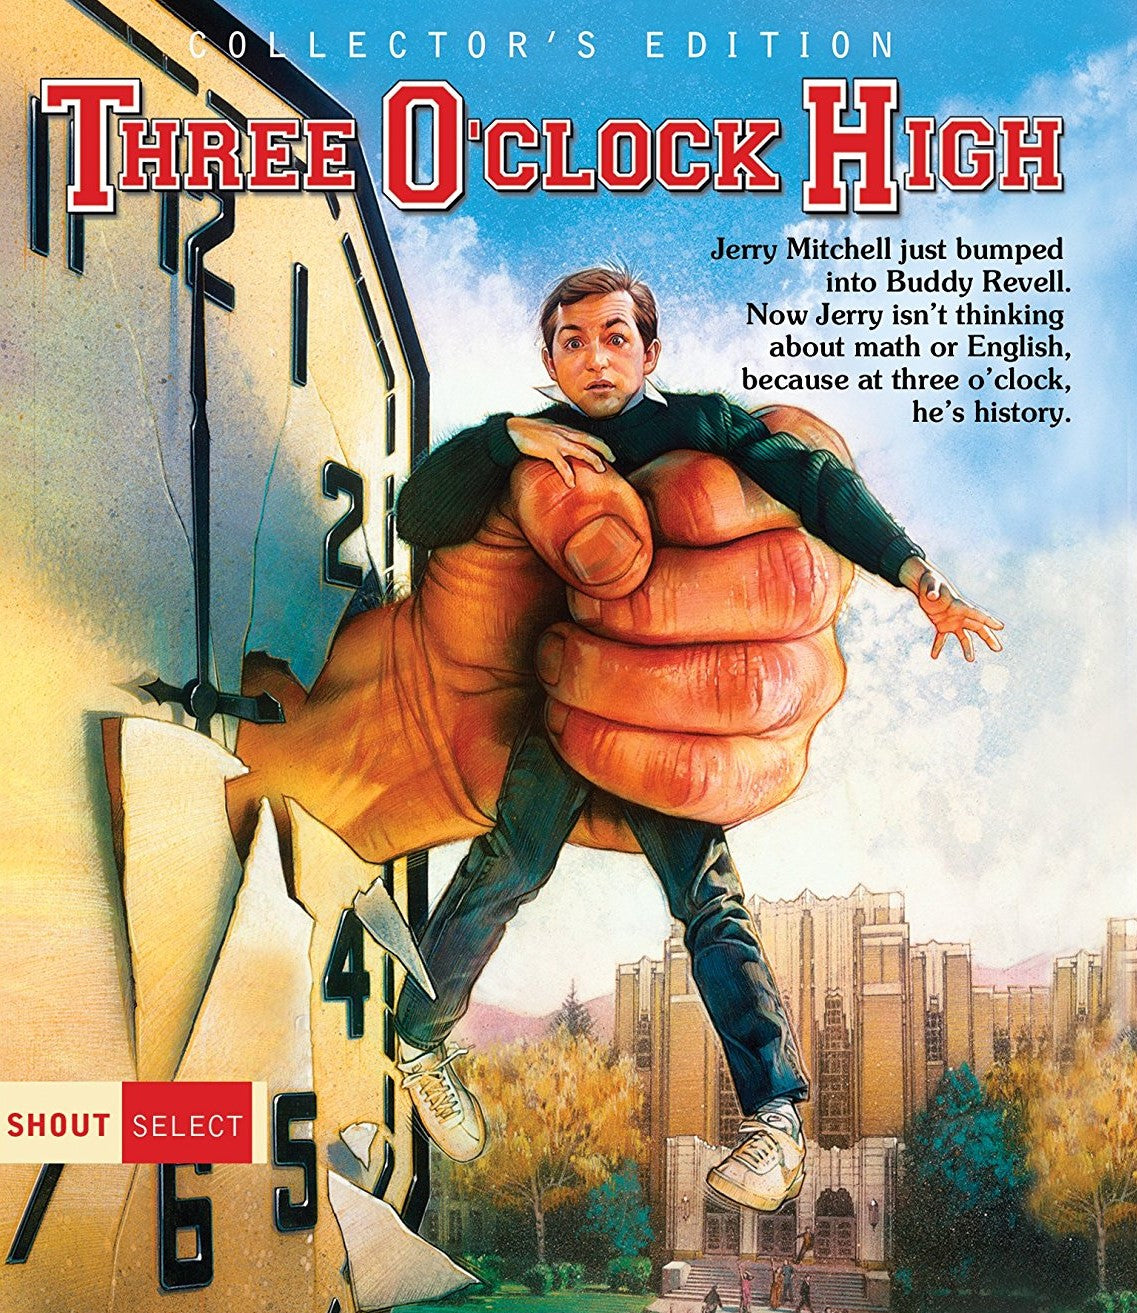 Three Oclock High (Collectors Edition) Blu-Ray Blu-Ray